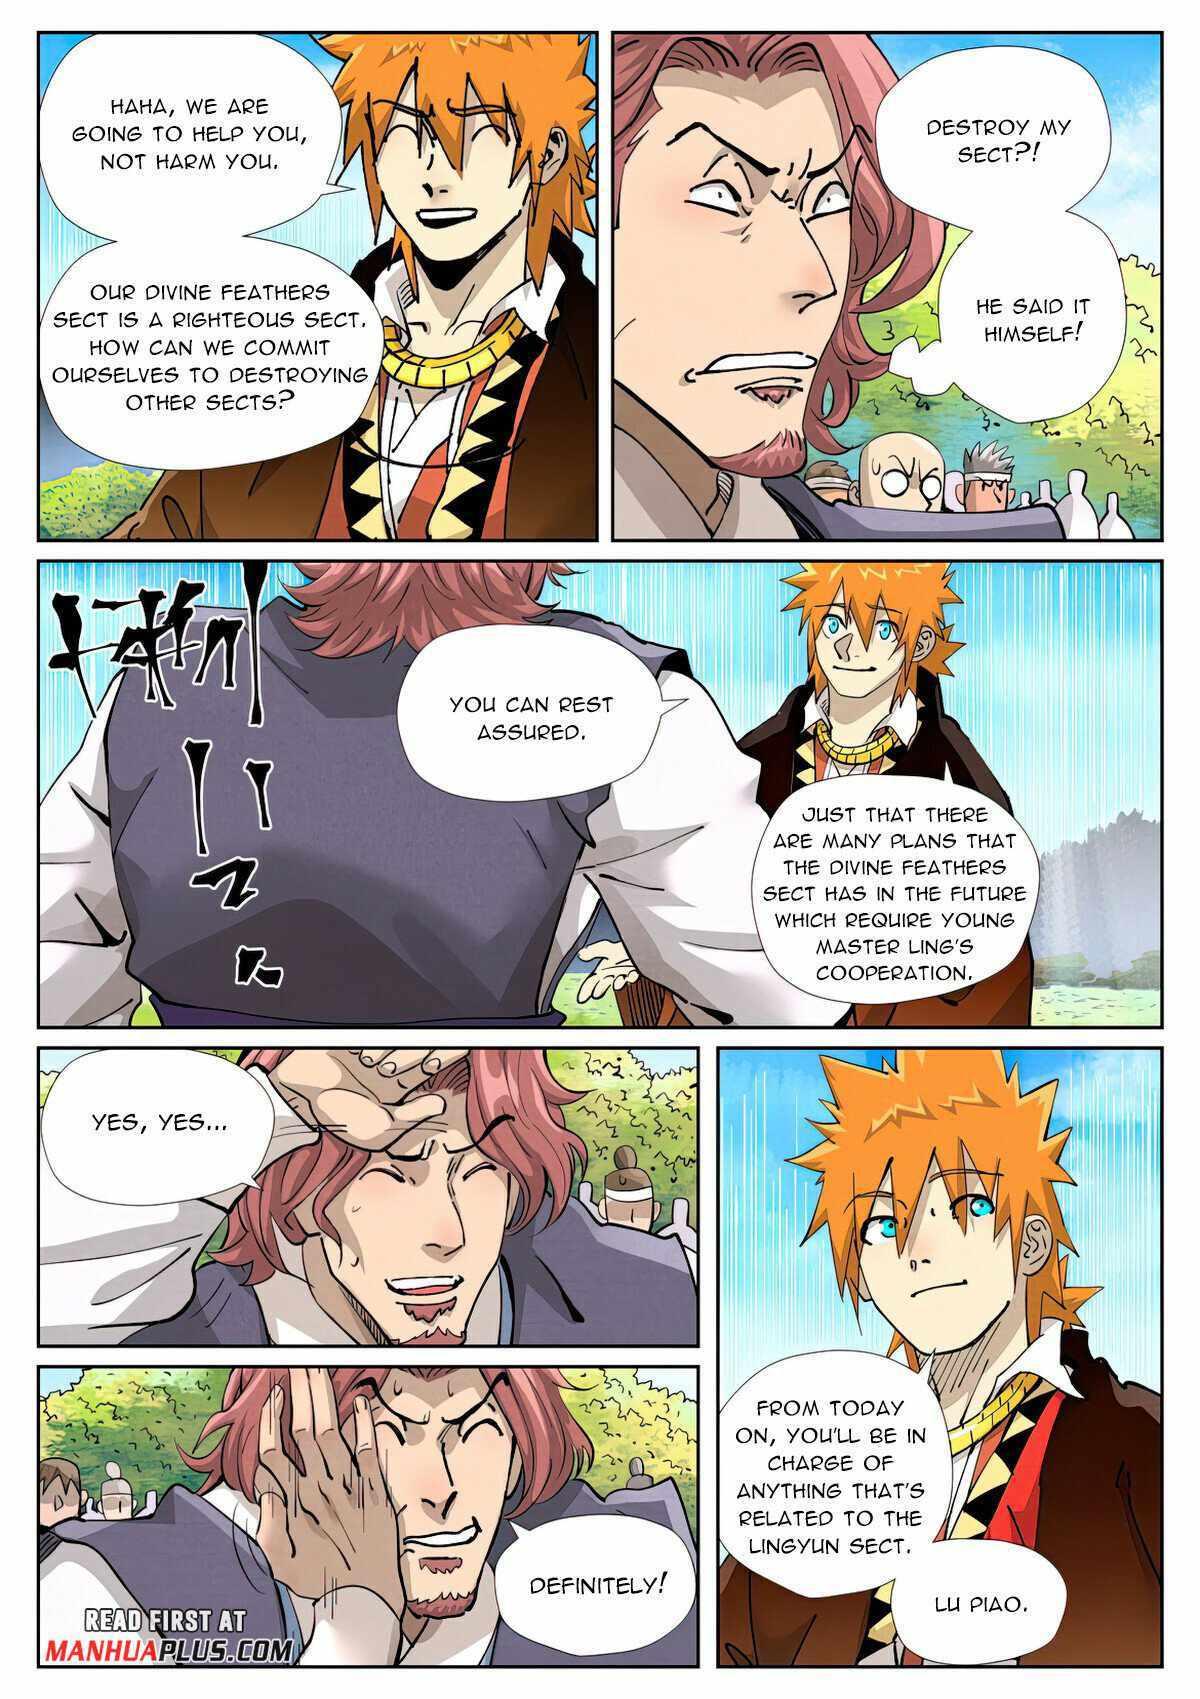 Tales Of Demons And Gods Chapter 431-1 page 9 - Mangakakalot